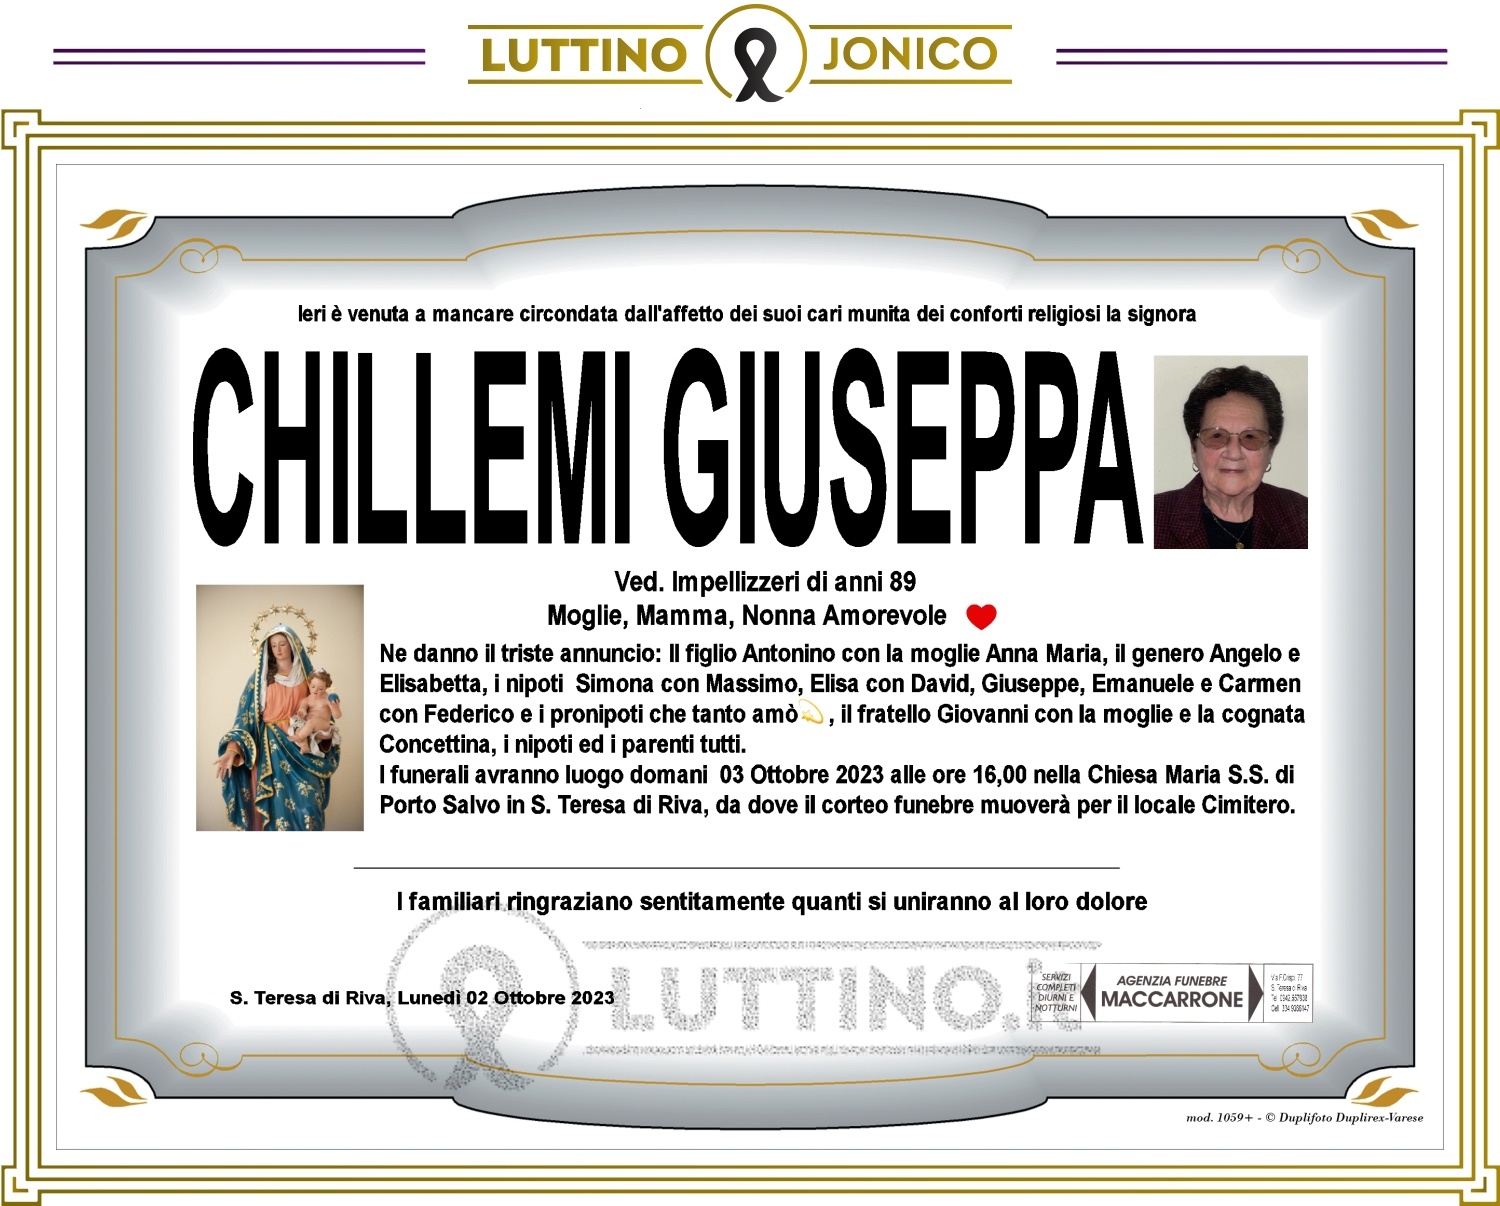 Giuseppa Chillemi